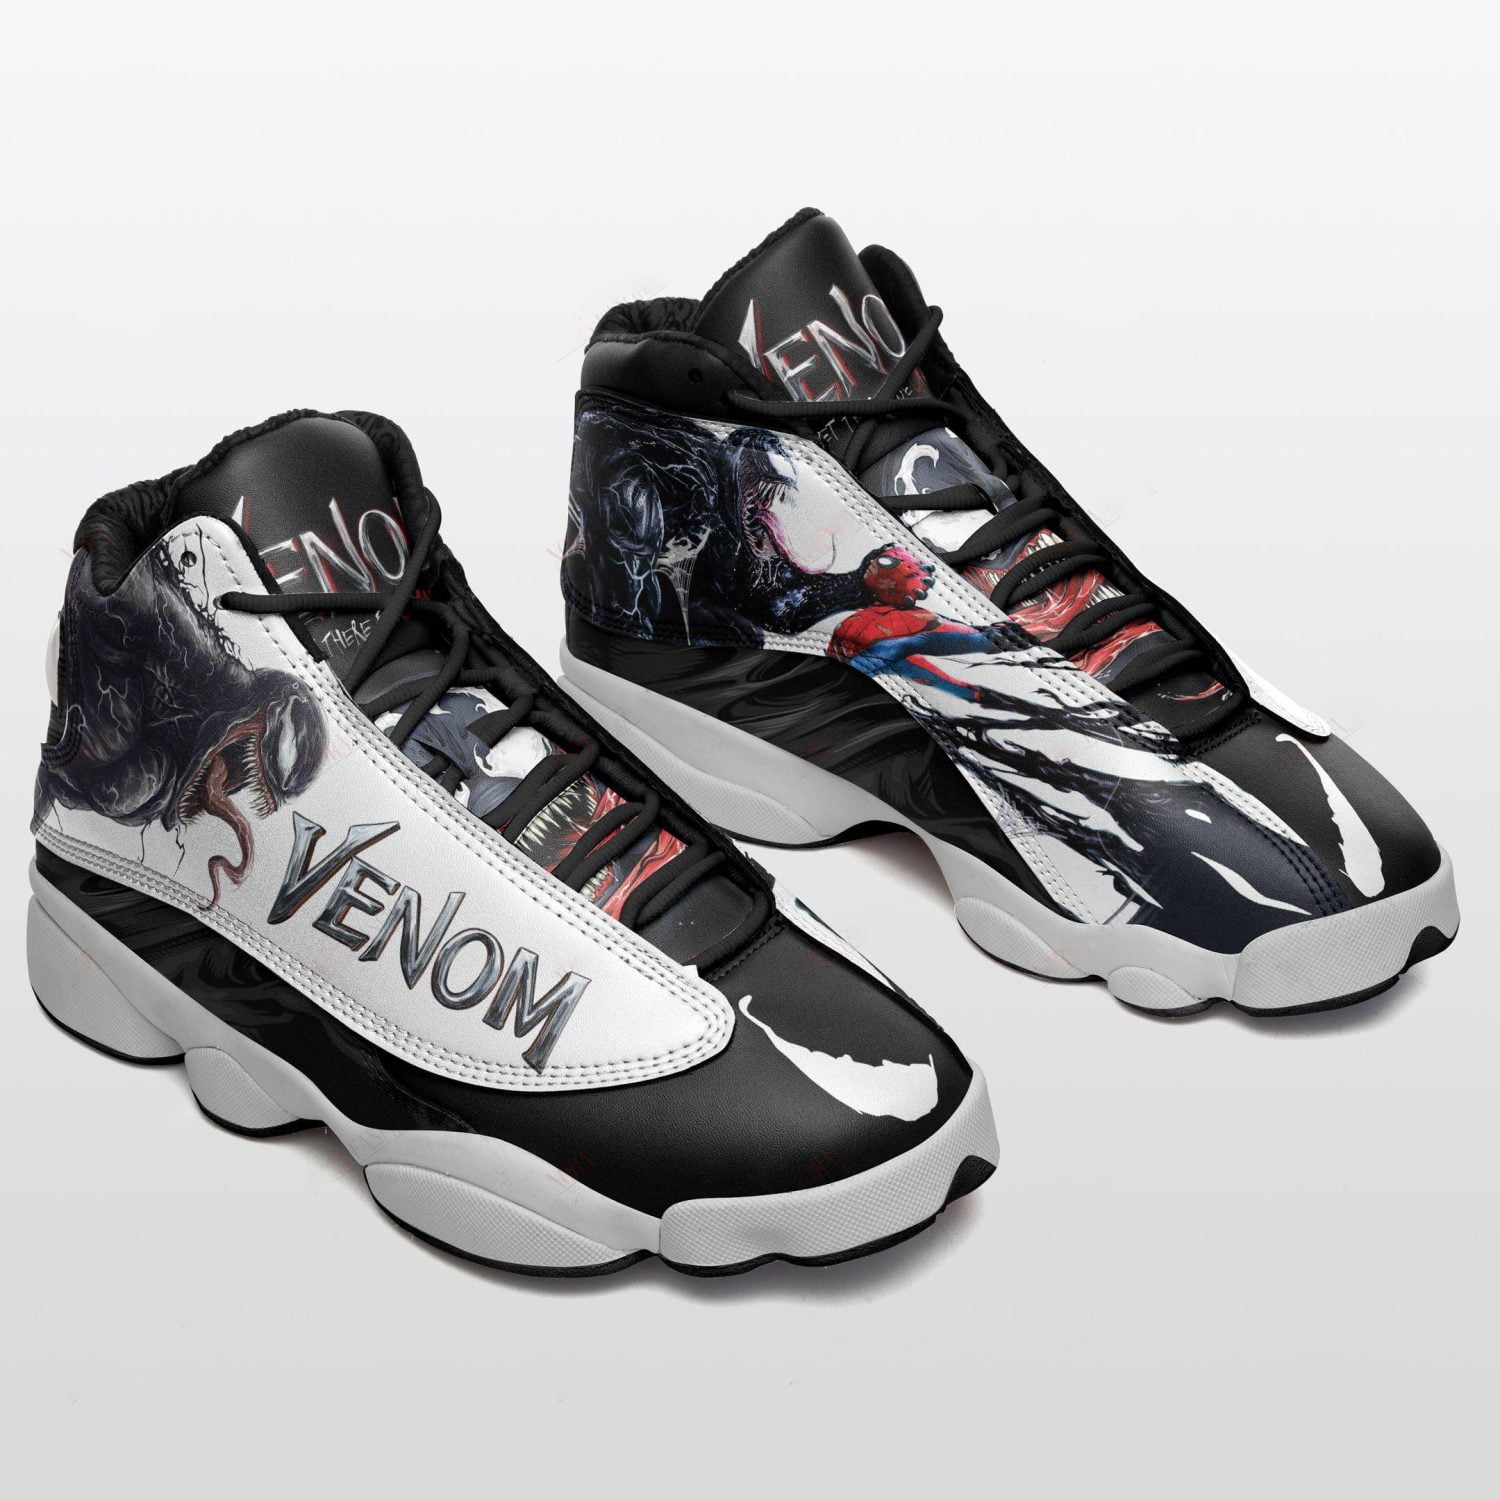 Venom Movie Lover Air Jordan 13 Shoes For Men And Women Style: Women's Air Jordan 13, Color: Black